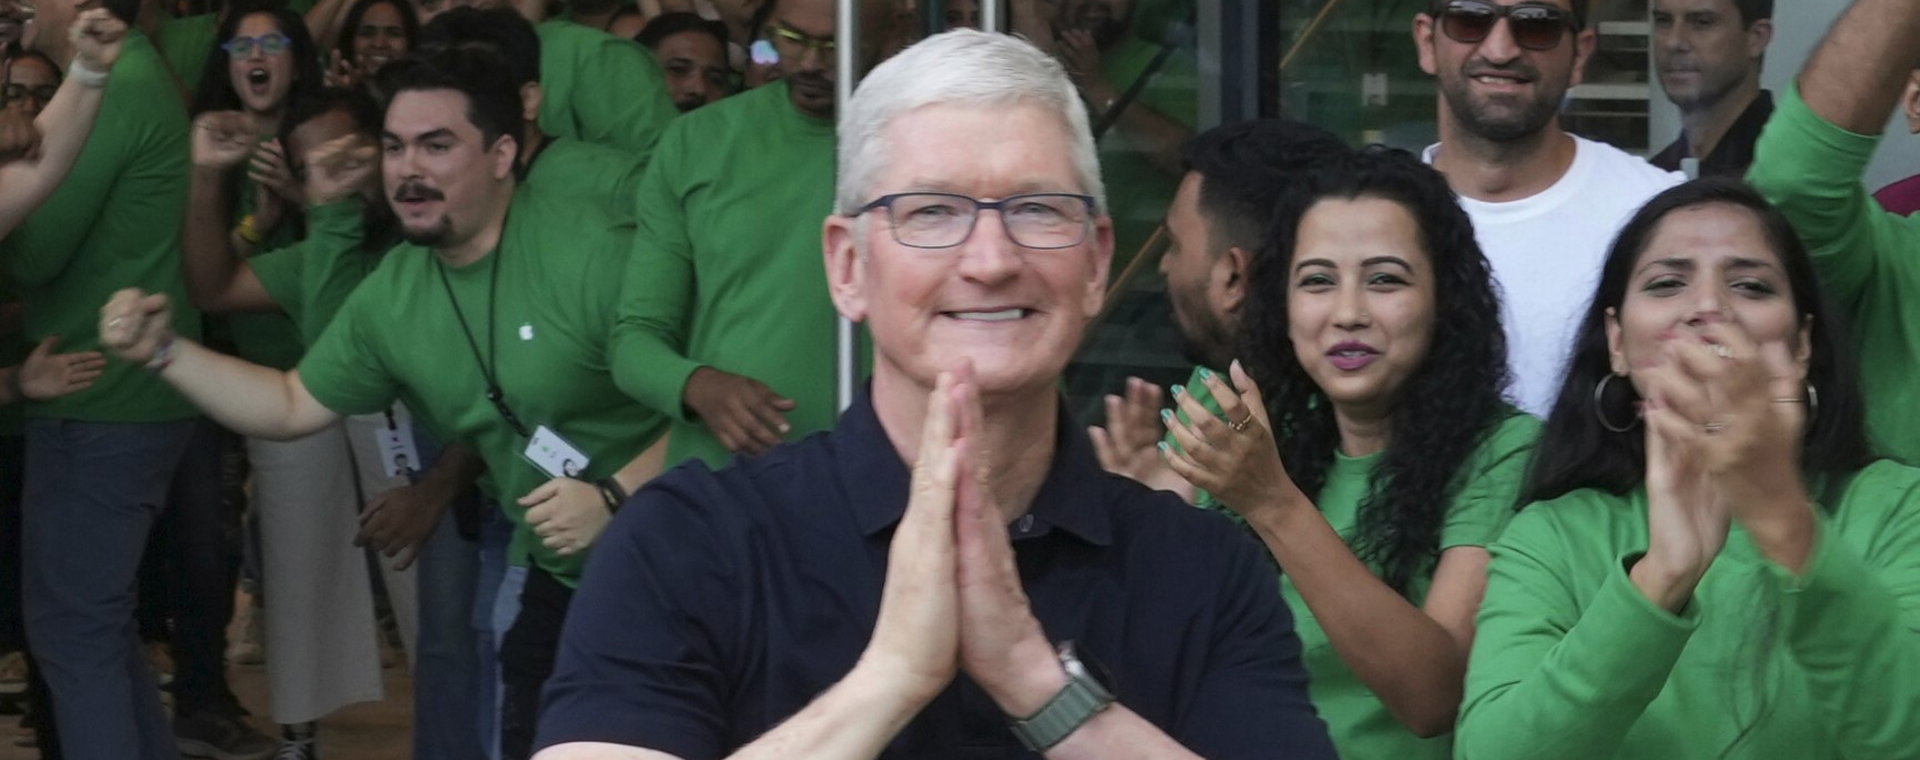 Na zdjęciu: Tim Cook, CEO Apple'a, na otwarciu sklepu w Indiach